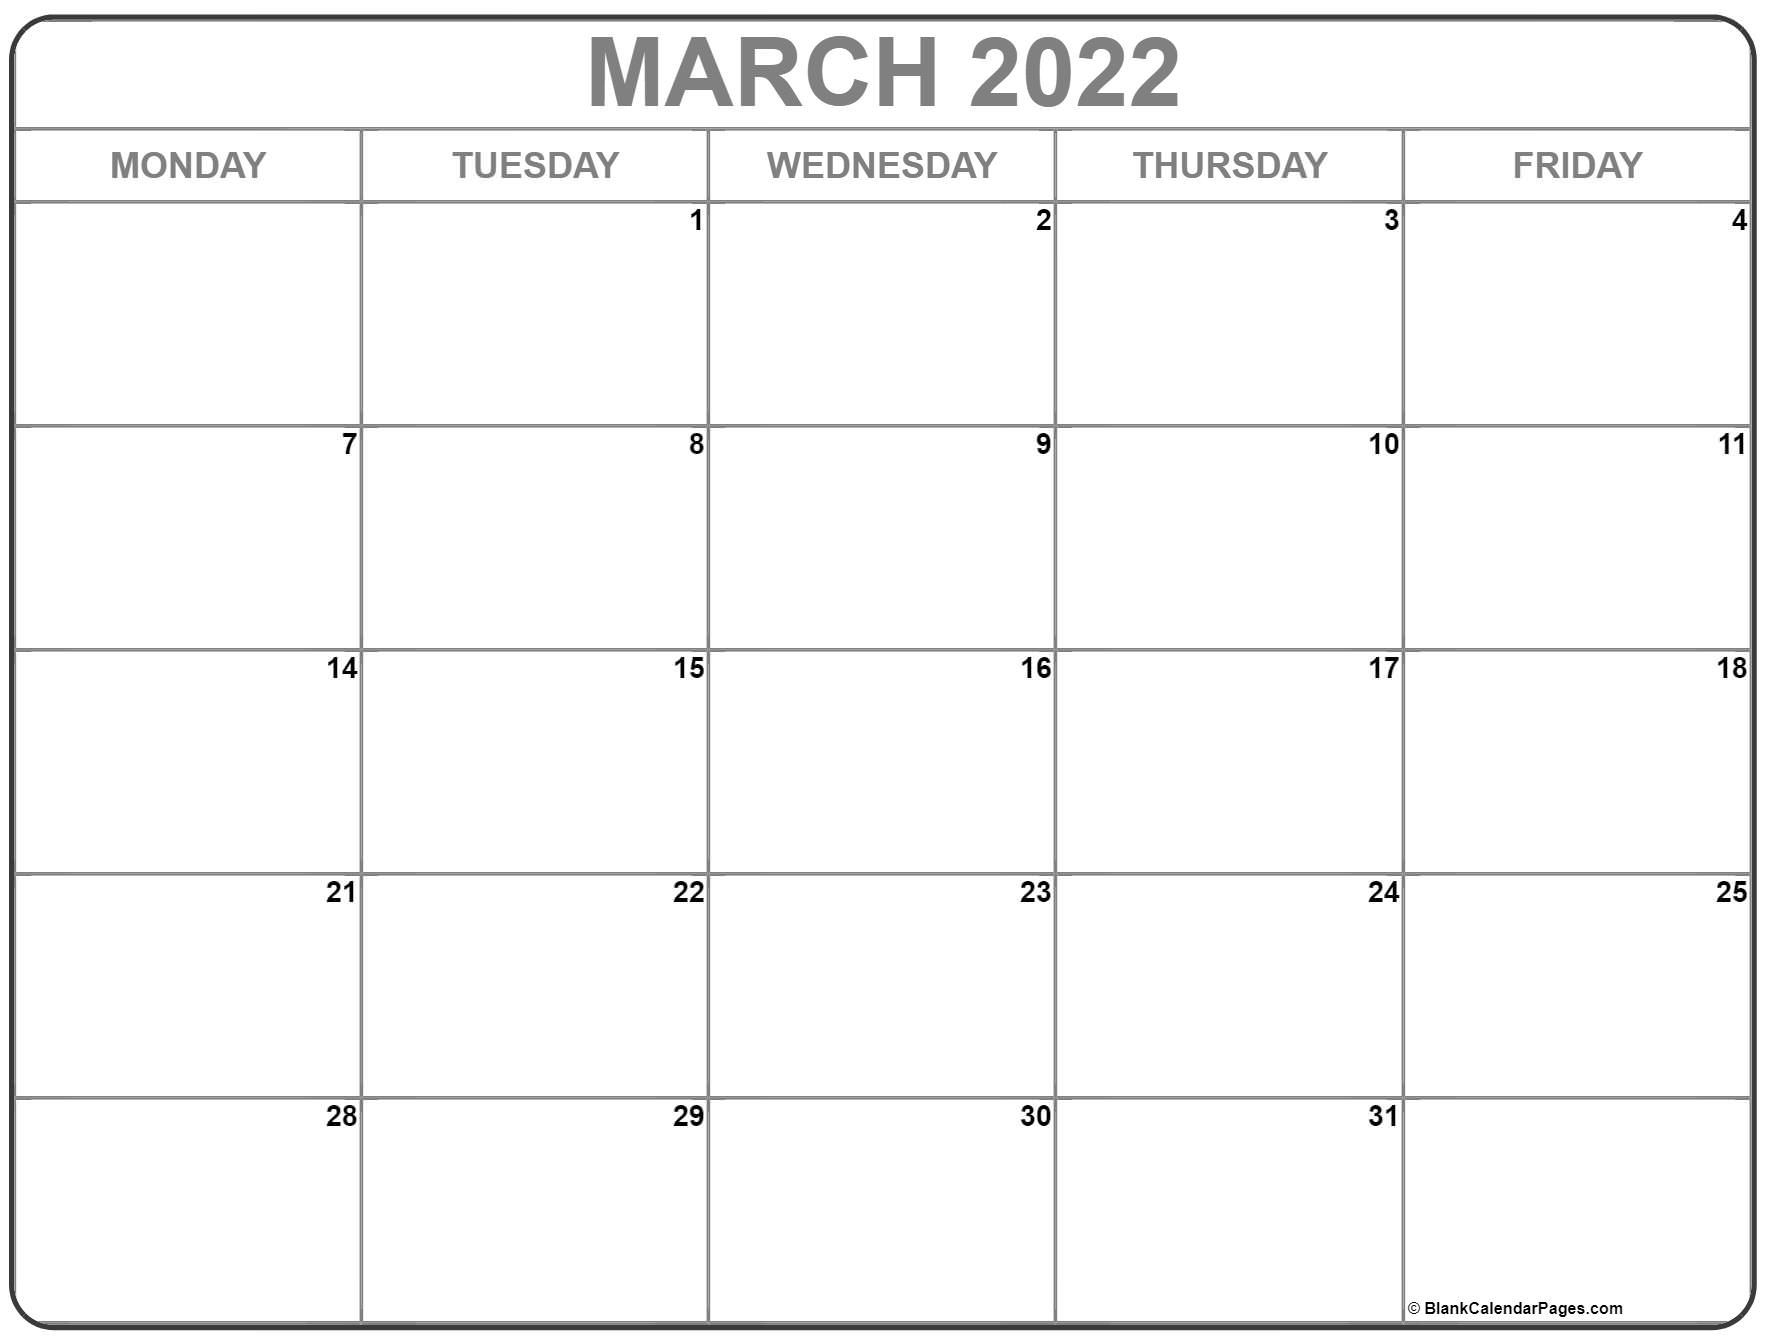 March 2022 Monday Calendar | Monday To Sunday